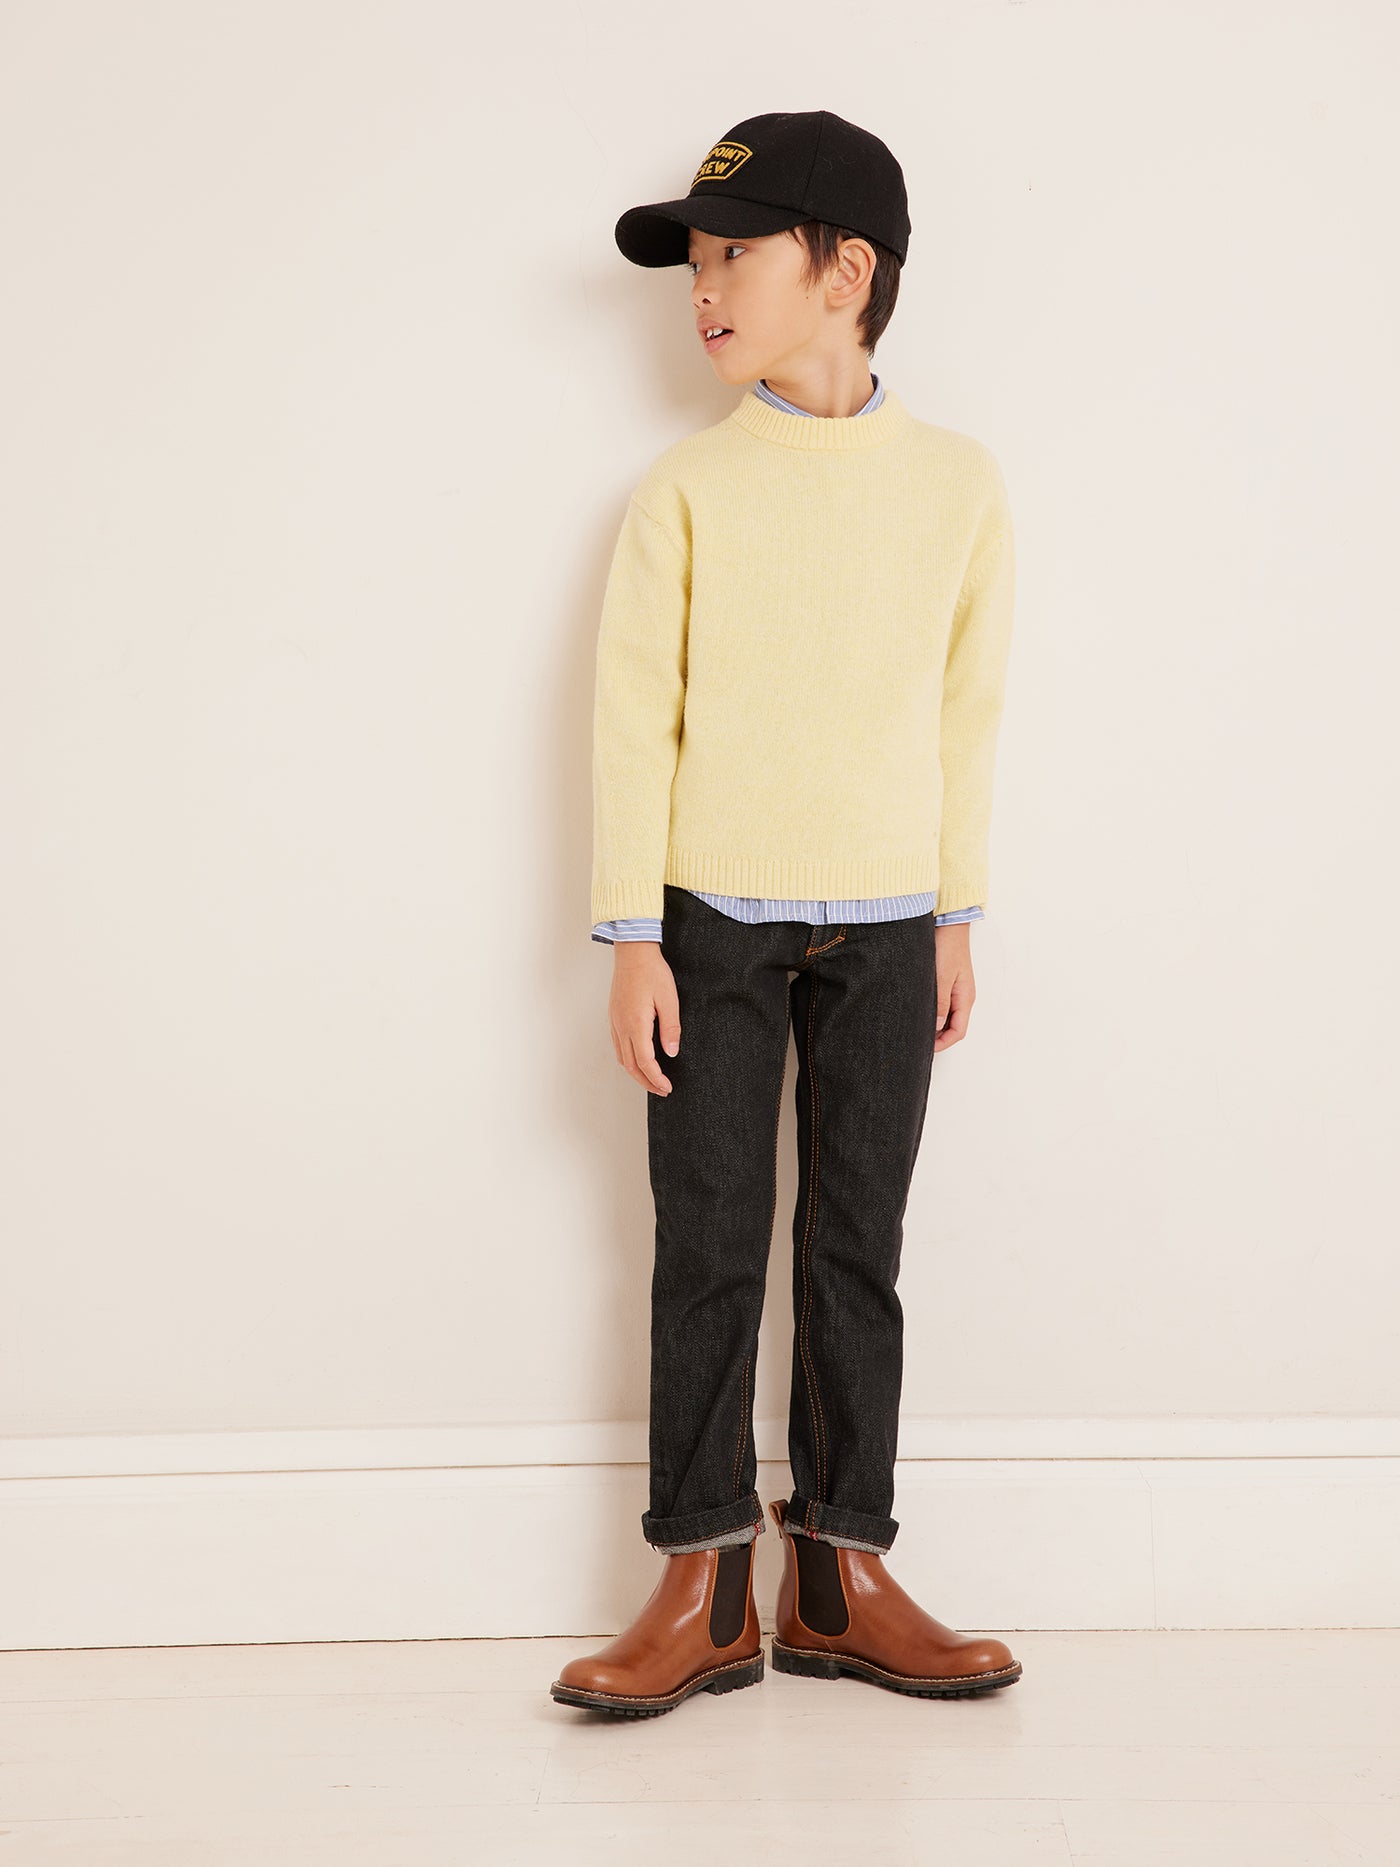 Winter 2023 boy's look yellow sweater